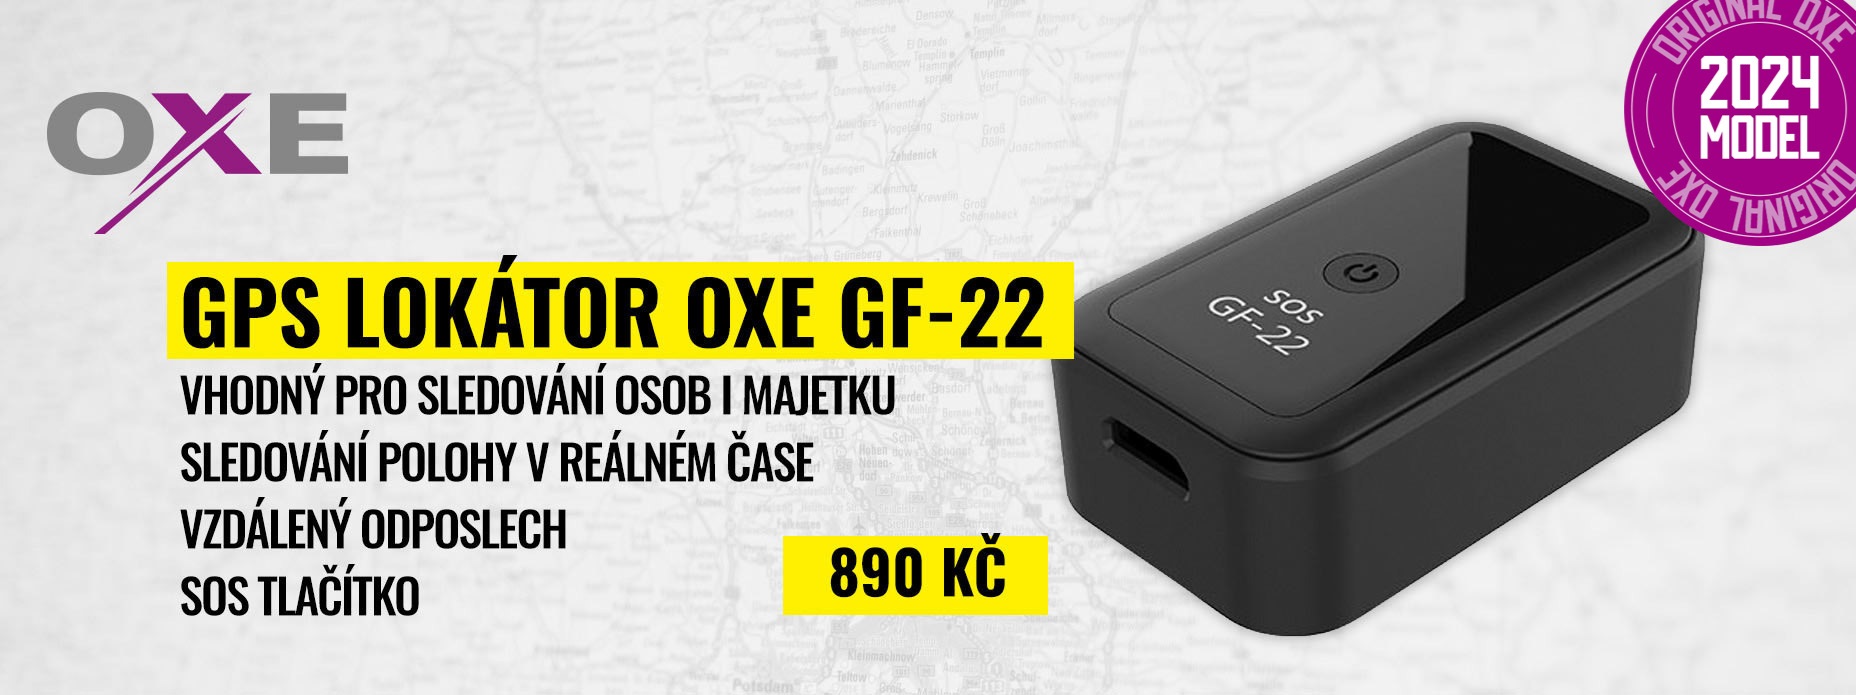 OXE GF-22 - GPS lokátor